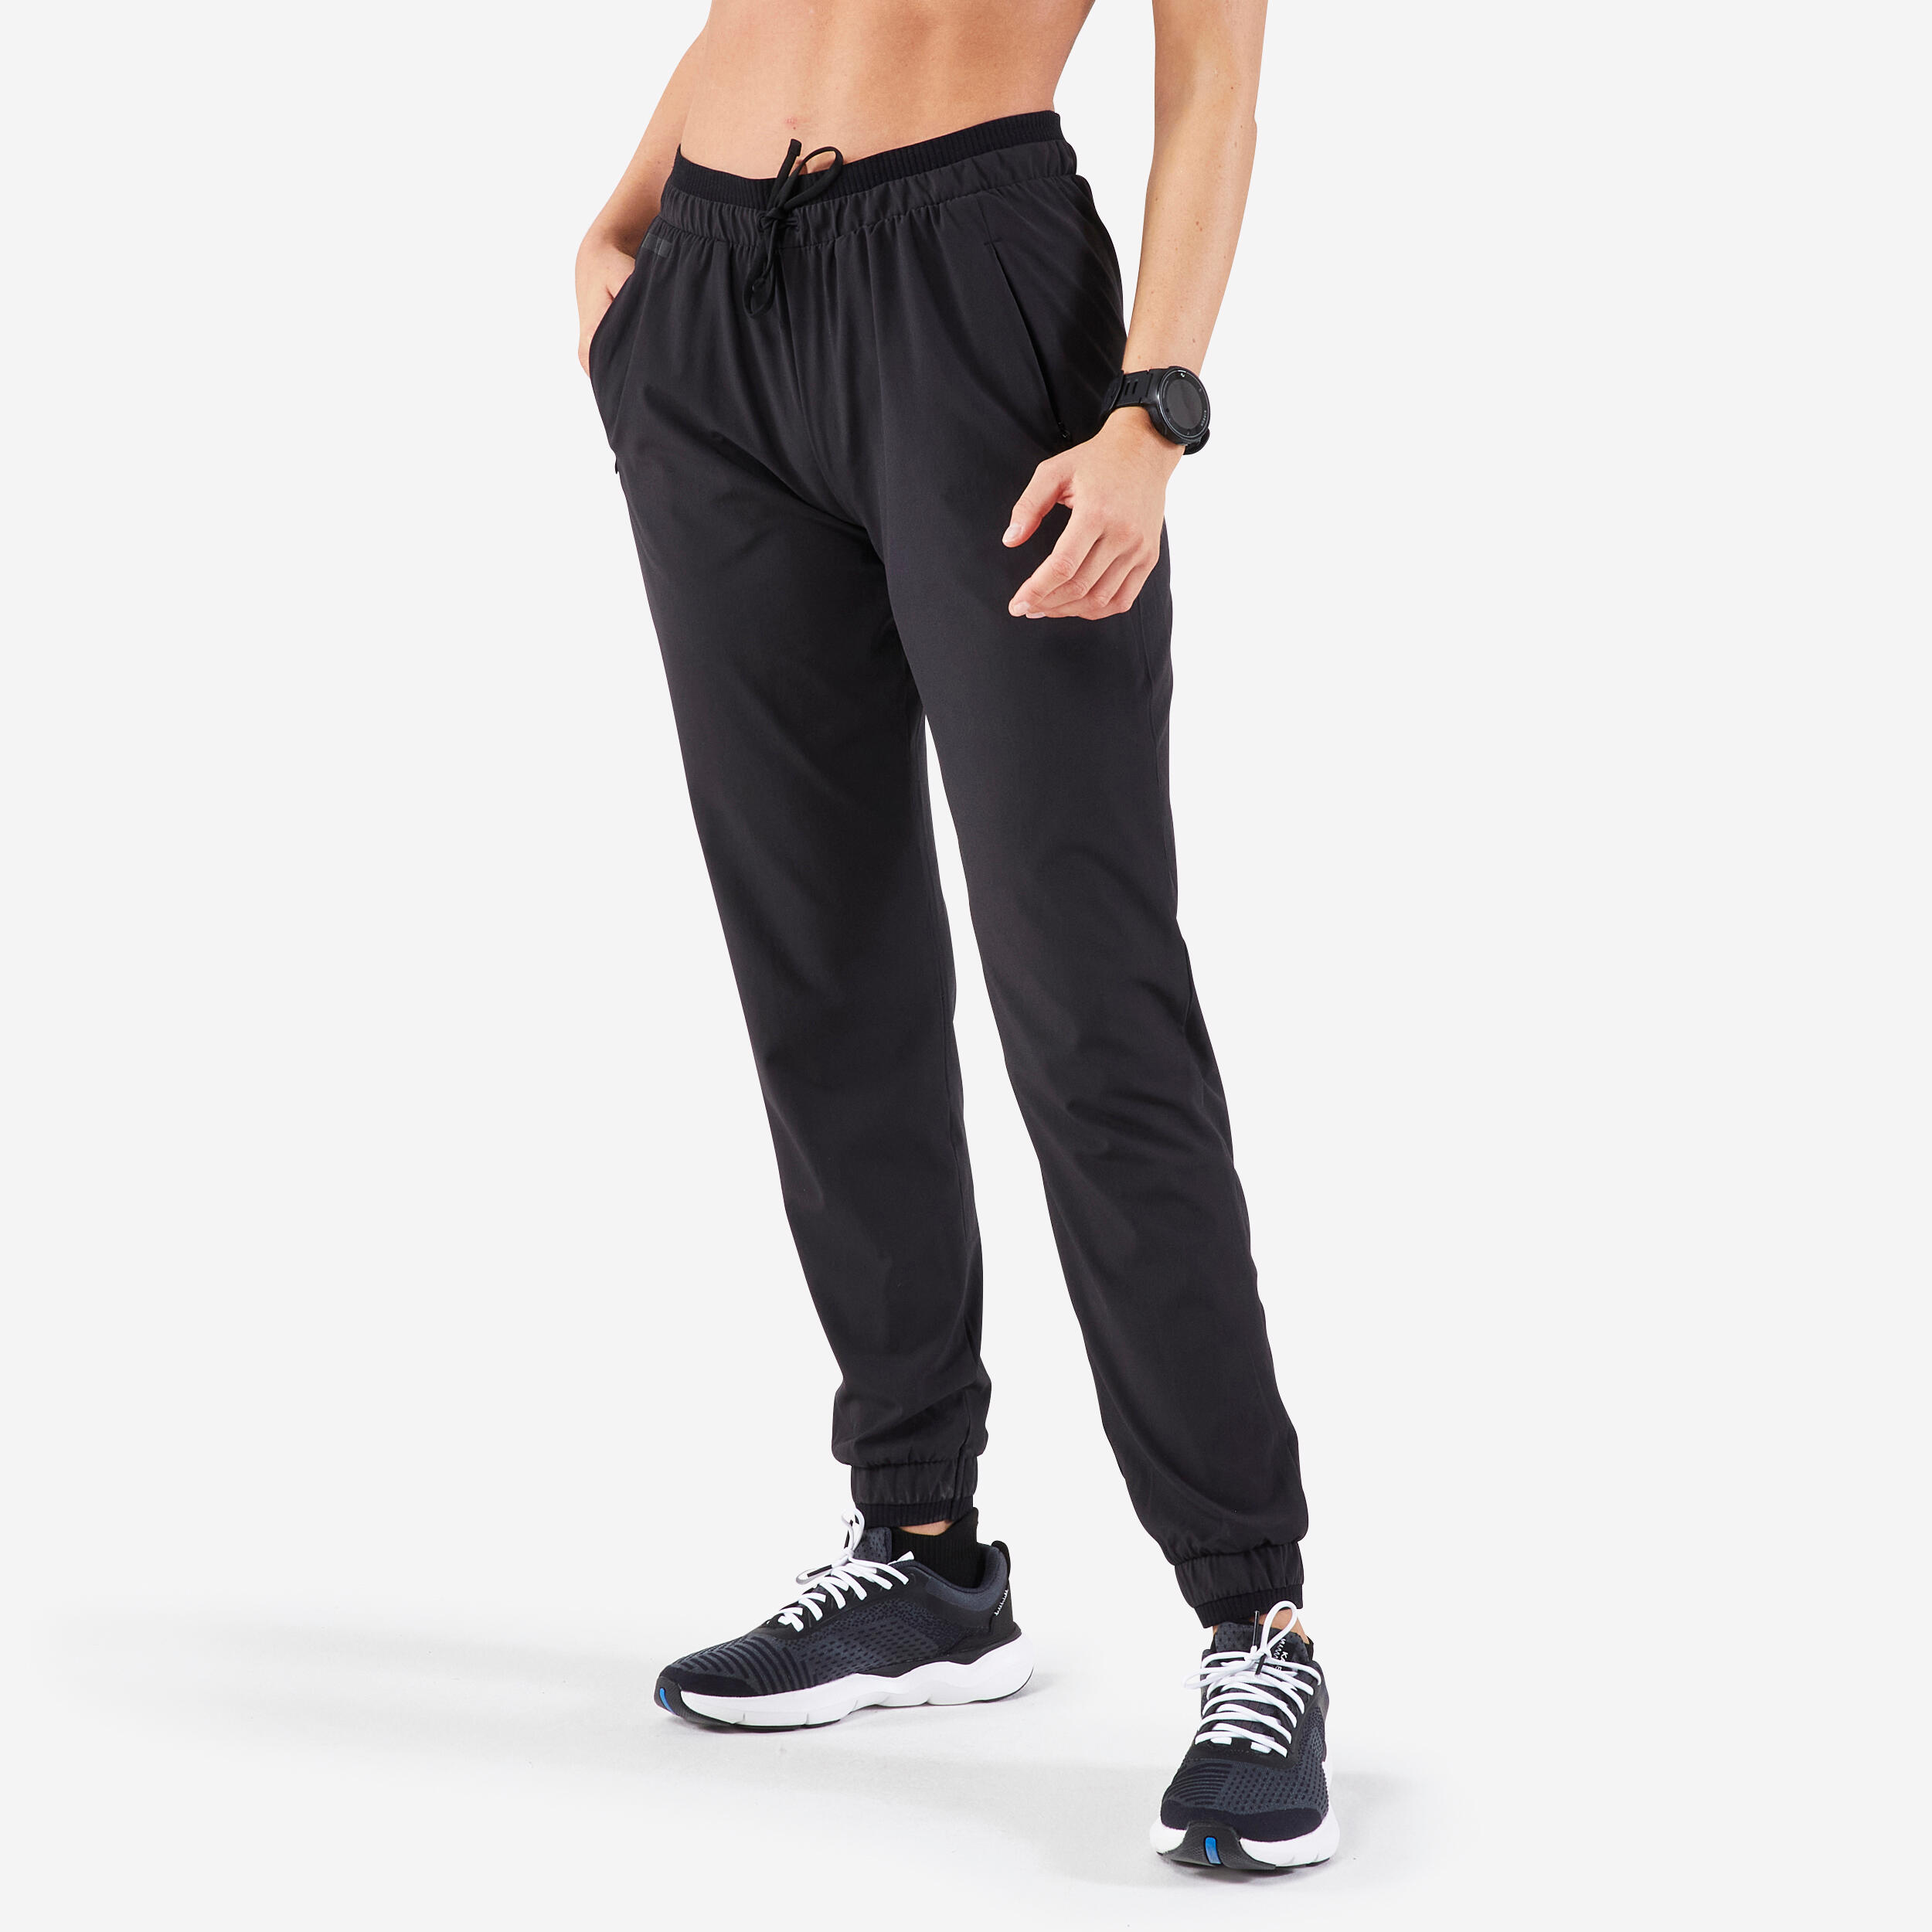 Pantalon de sport femme – 100 noir - Noir - Domyos - Décathlon